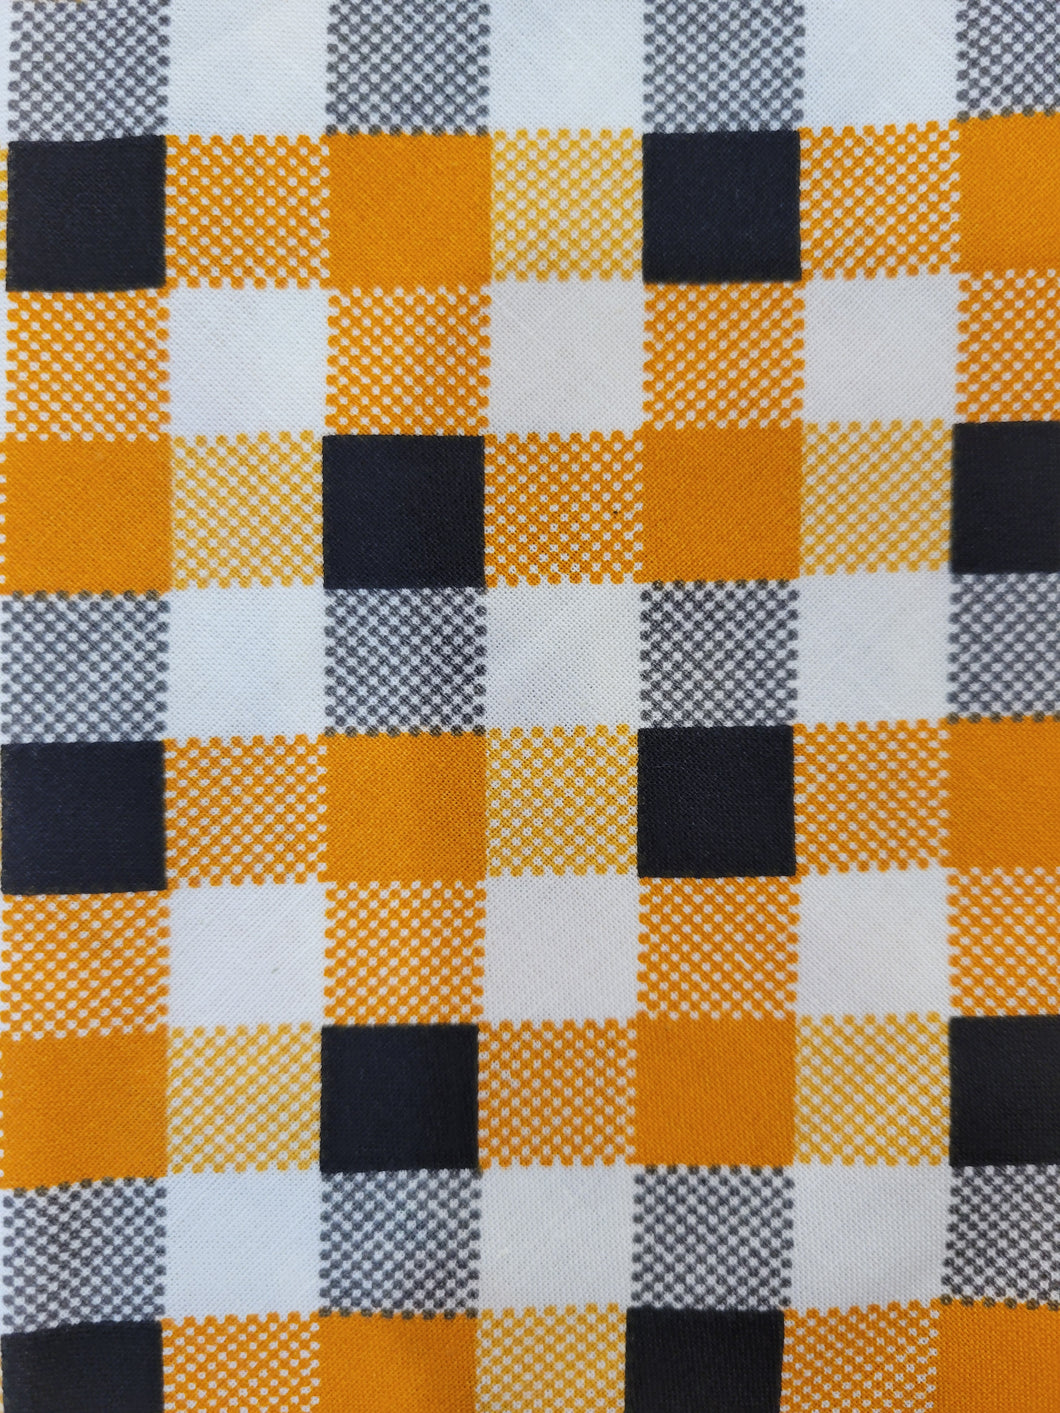 Orange/Black/Cream Checkered (LARGE)